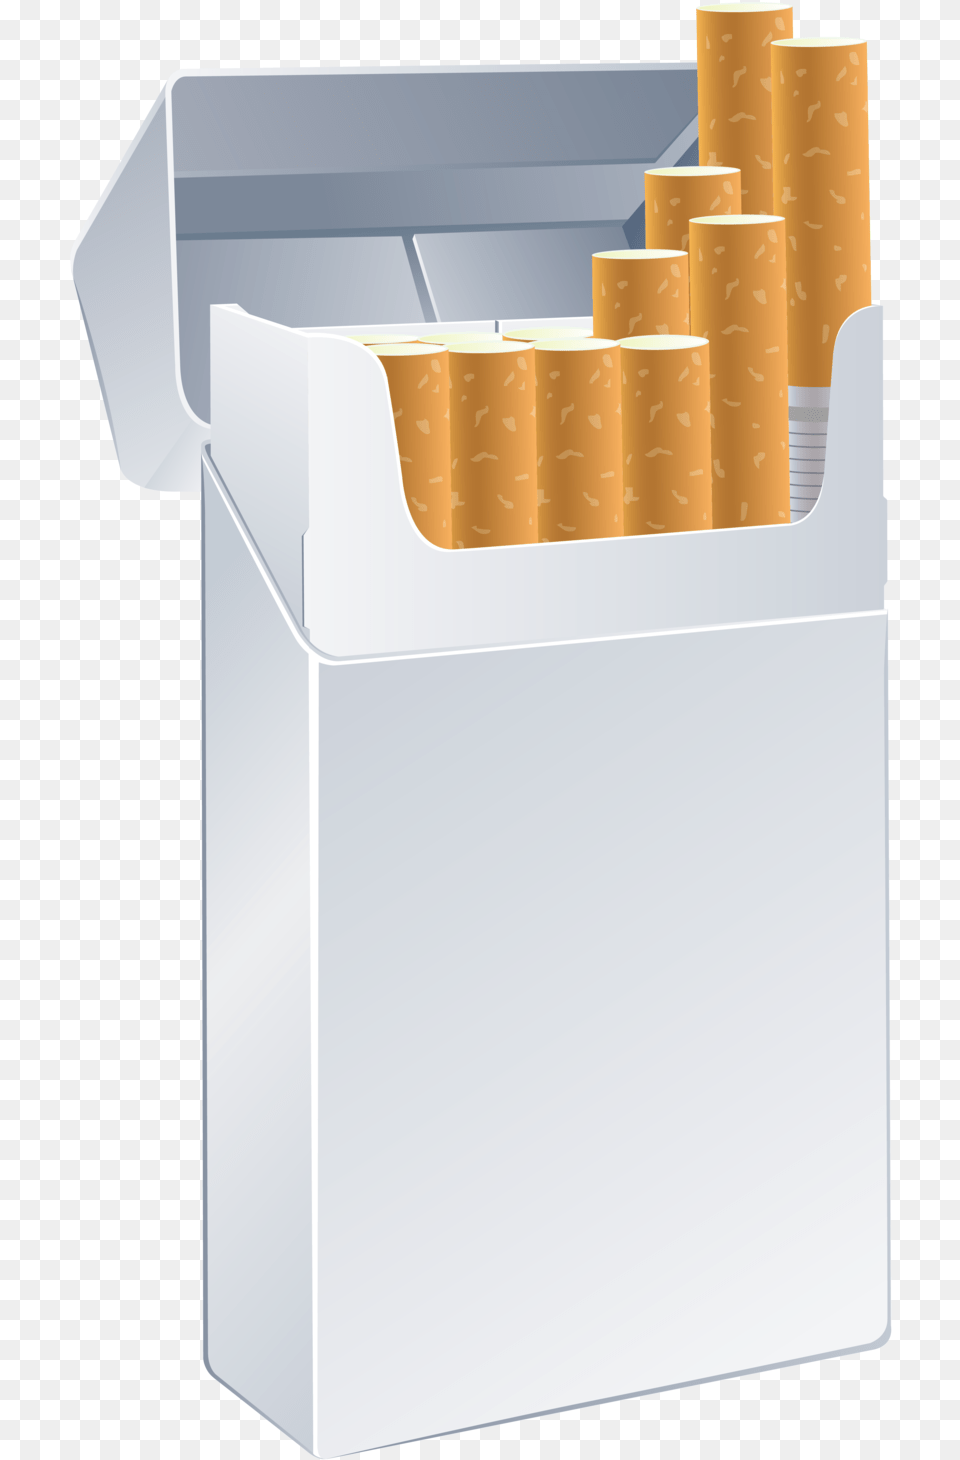 Cigarette Box Template Clipart Cigarette Template, Mailbox Png Image